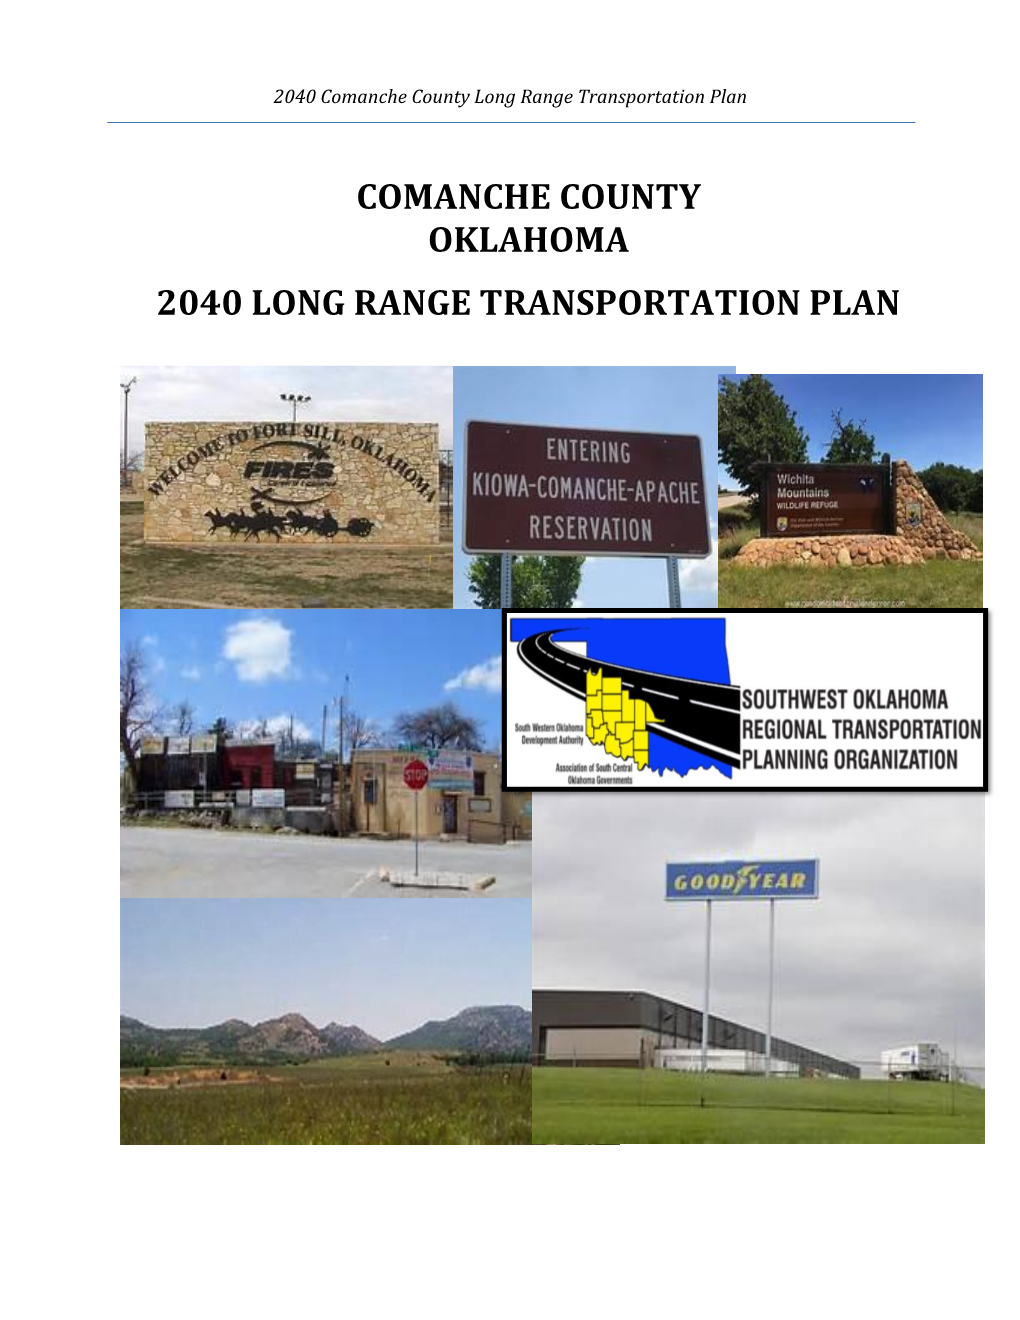 Comanche County Oklahoma 2040 Long Range Transportation Plan